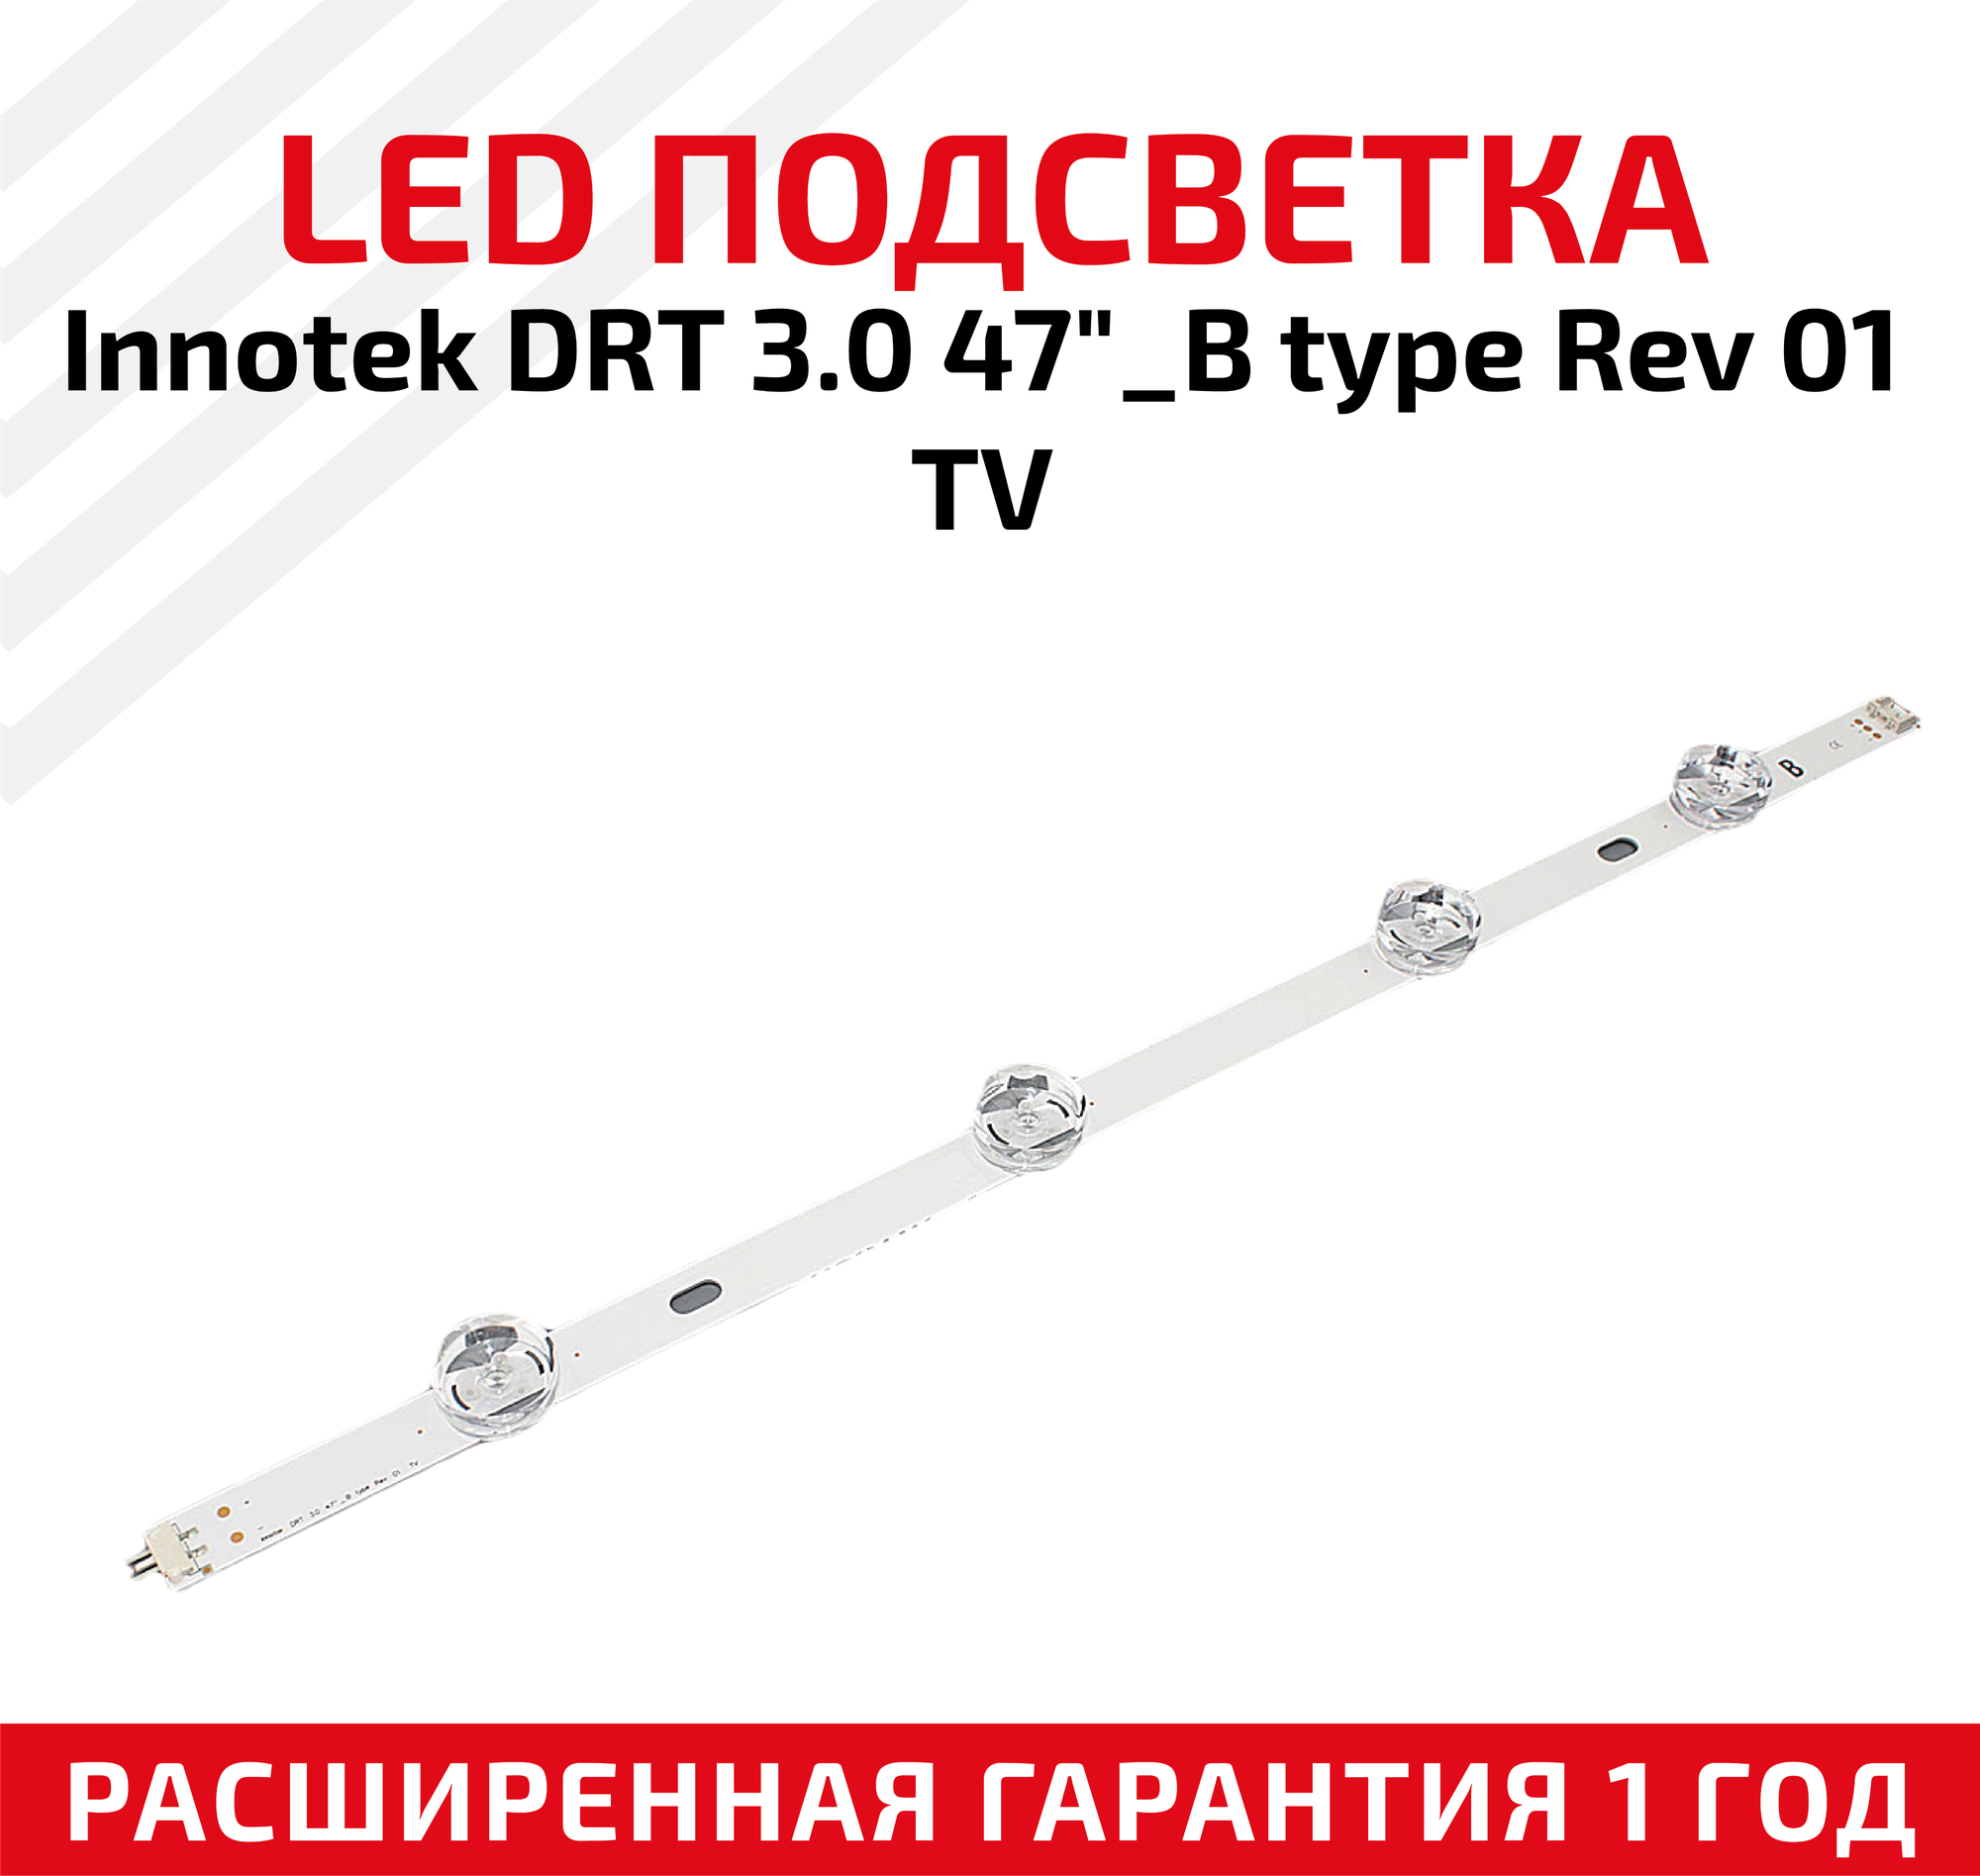 LED подсветка (светодиодная планка) для телевизора InnoteK DRT 3.0 47" _B Type Rev 01 TV